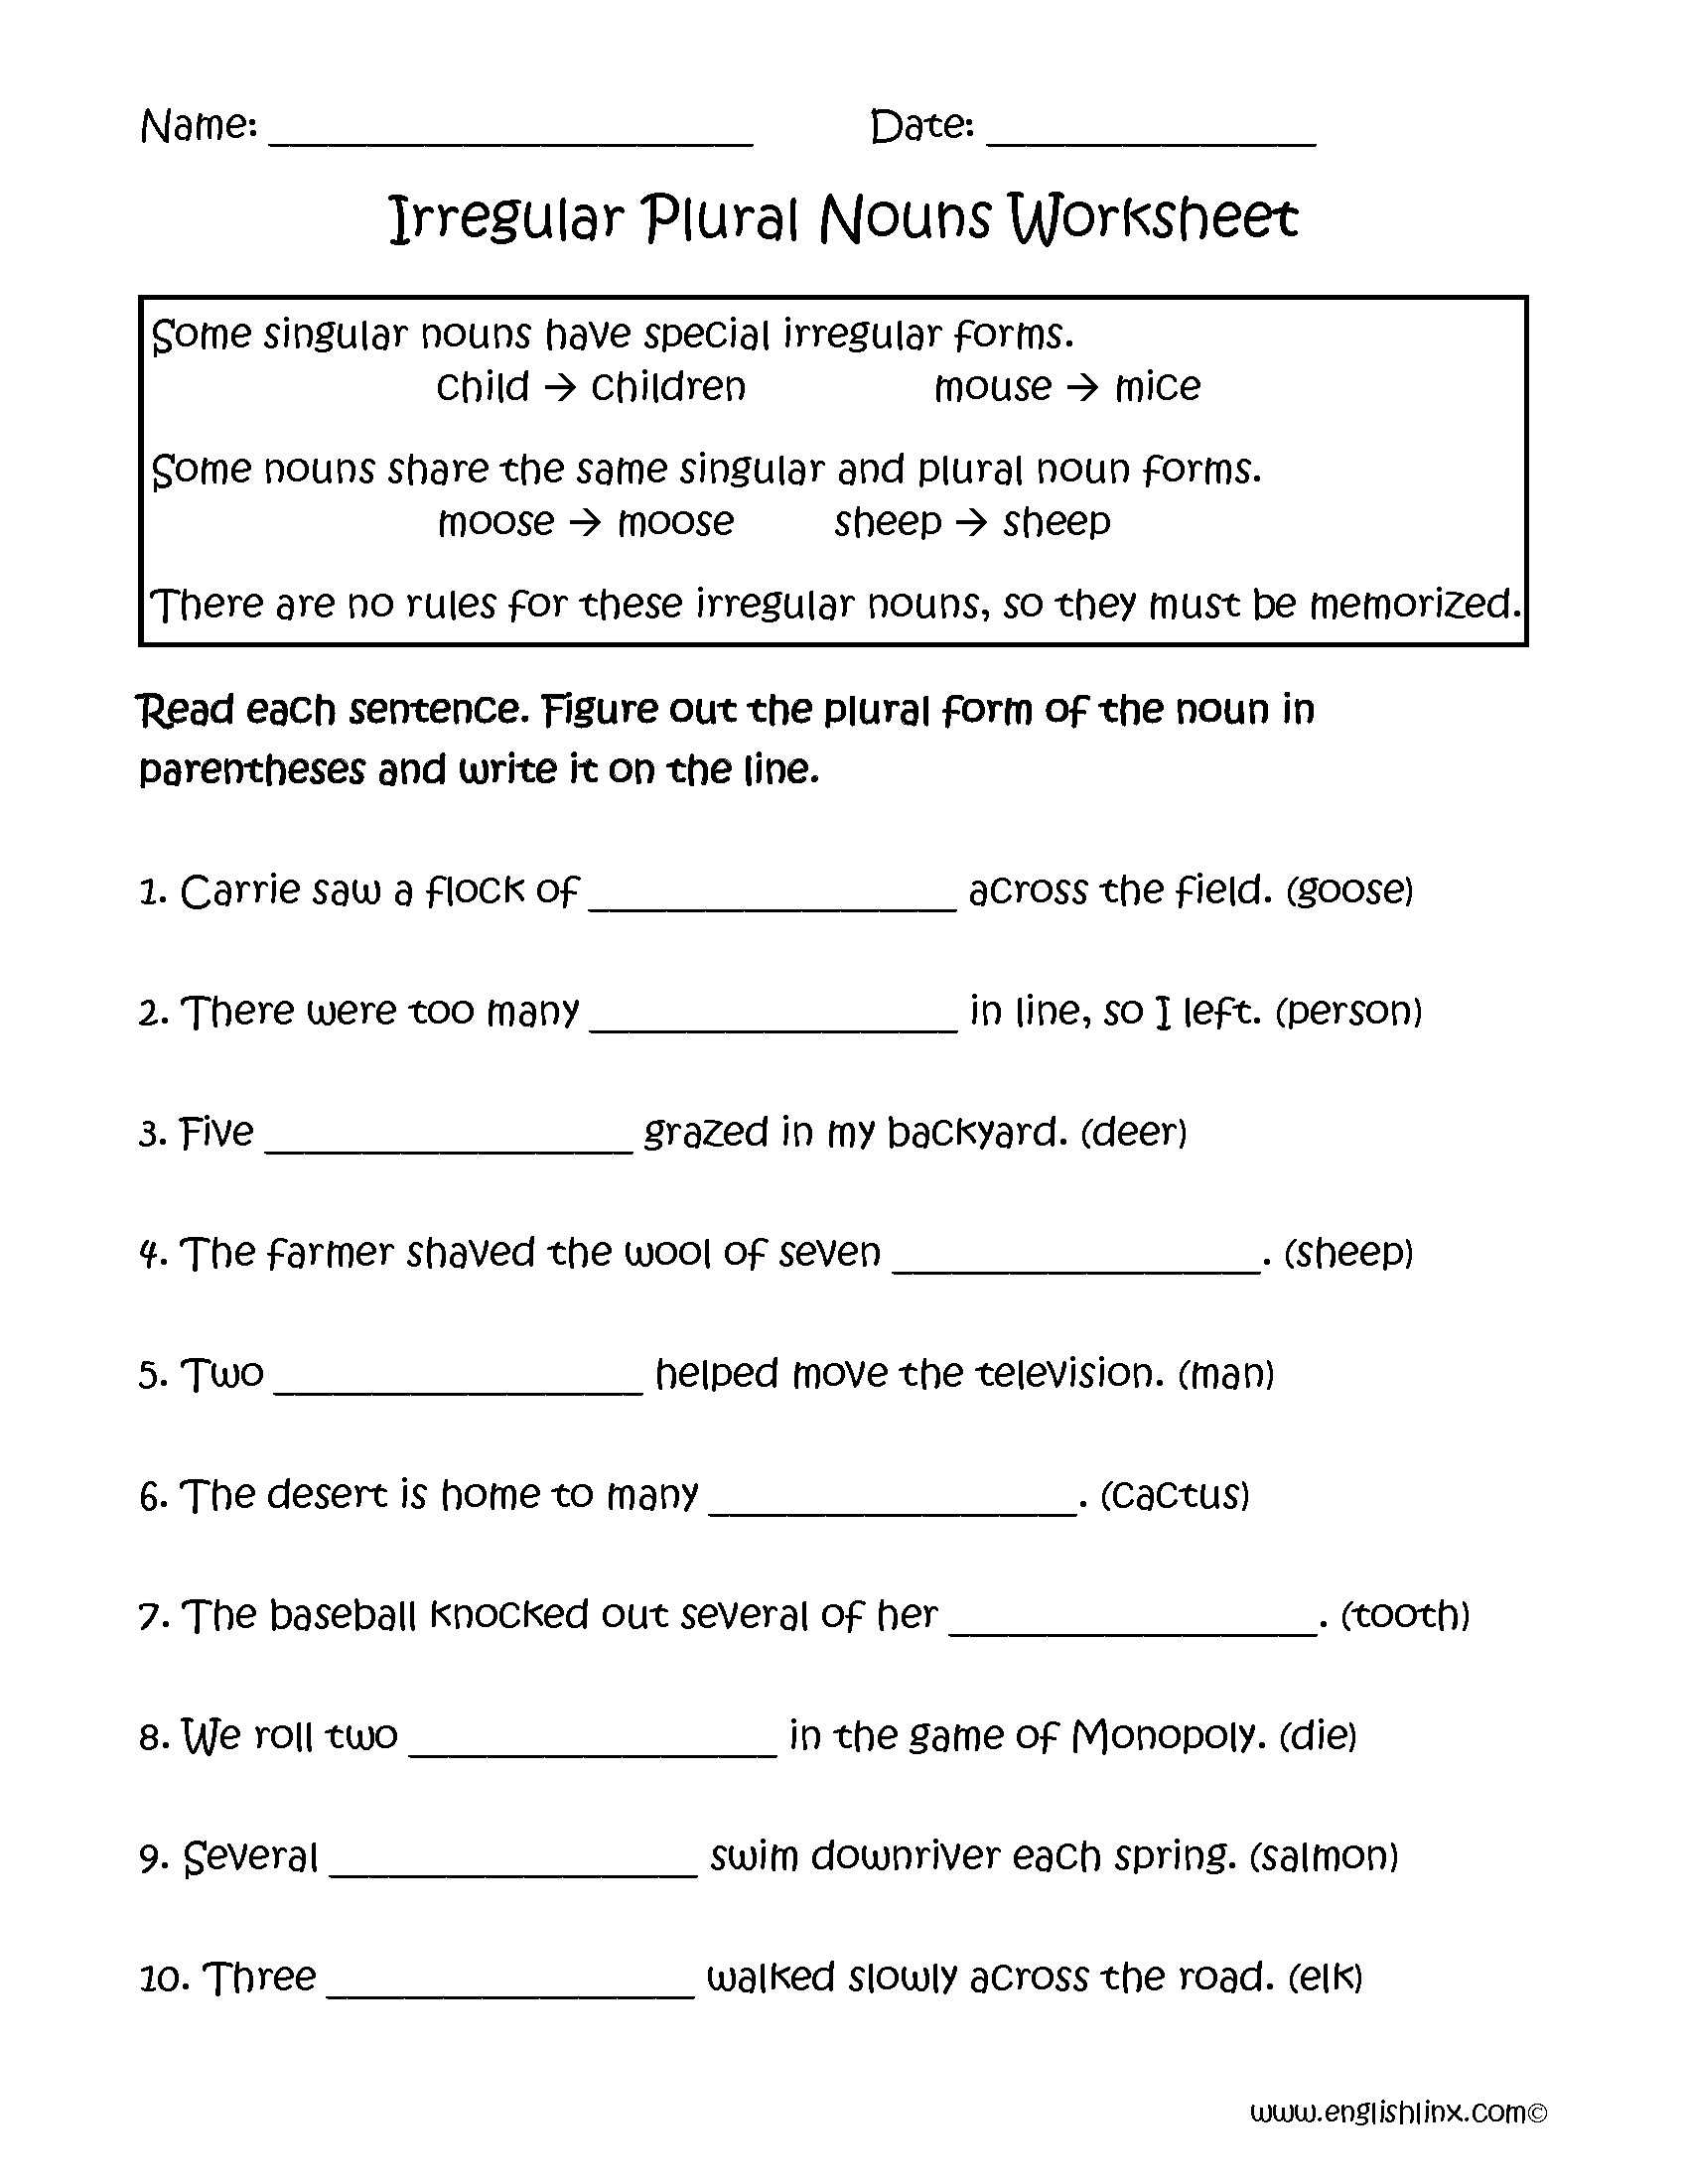 Unscramble Sentences Worksheets 1st Grade as Well as Free 1st Grade English Worksheets 1rd Grade Free